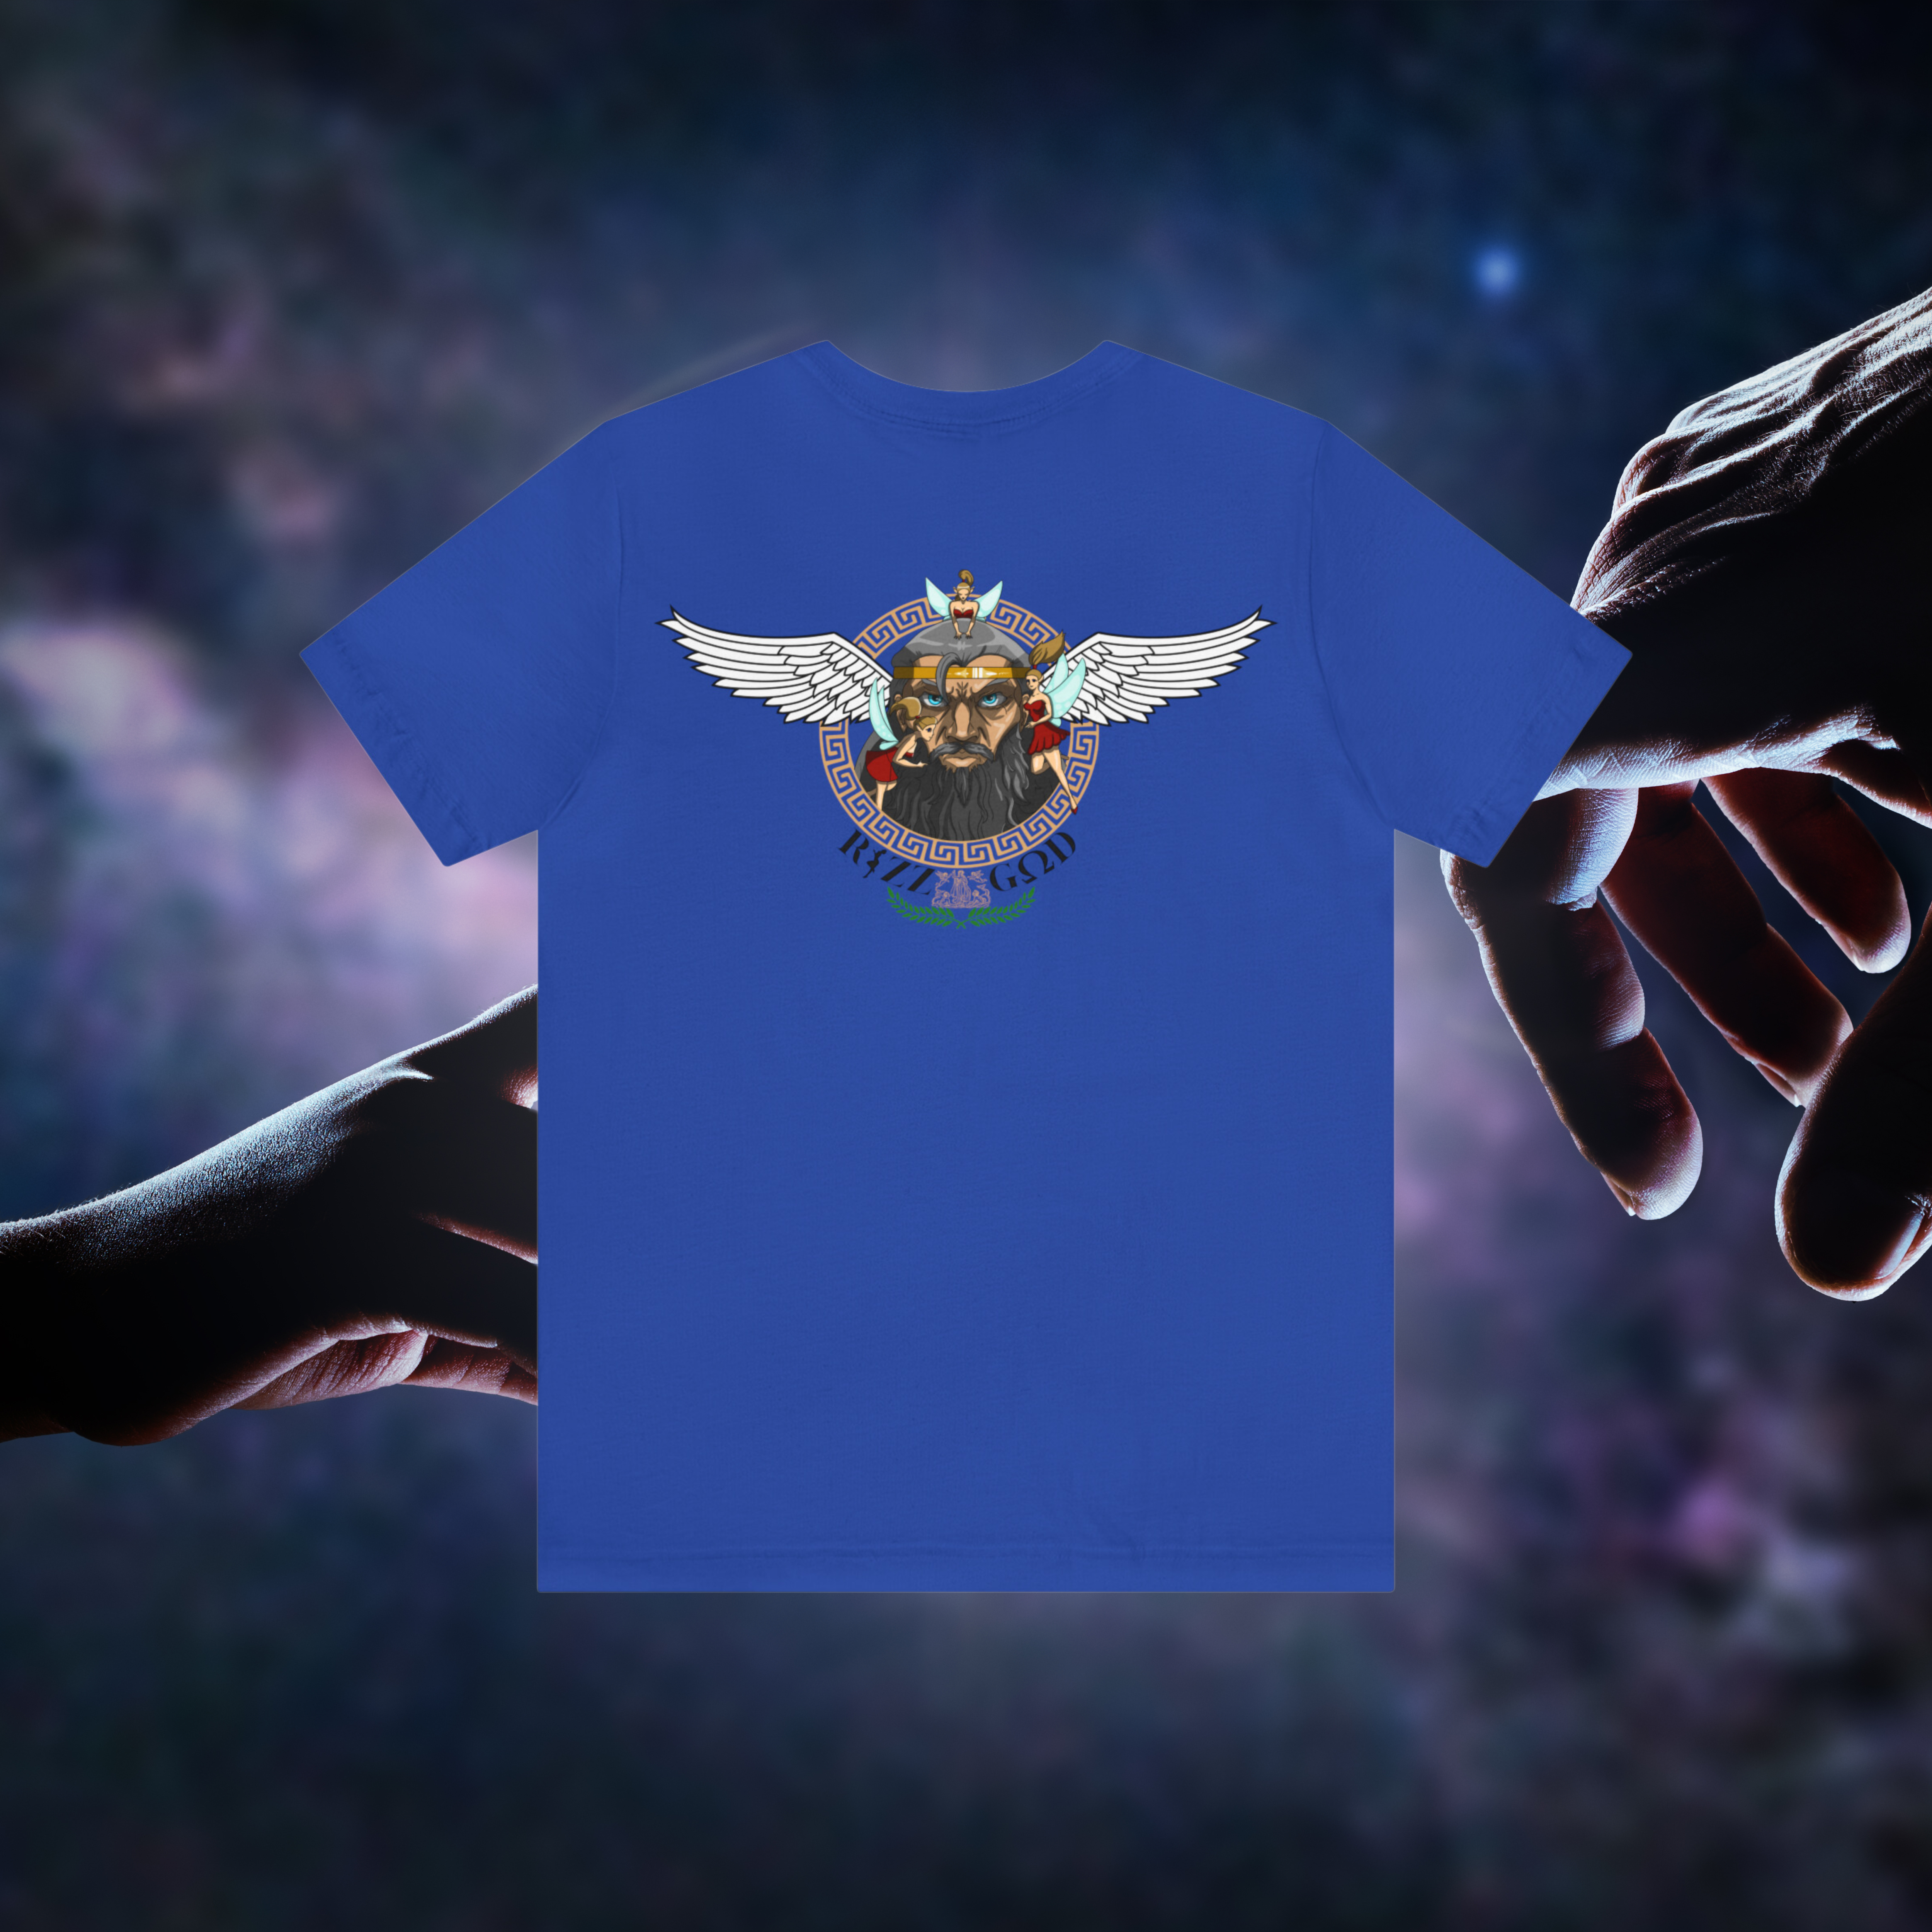 Rizz God V2 back design on a royal blue t-shirt